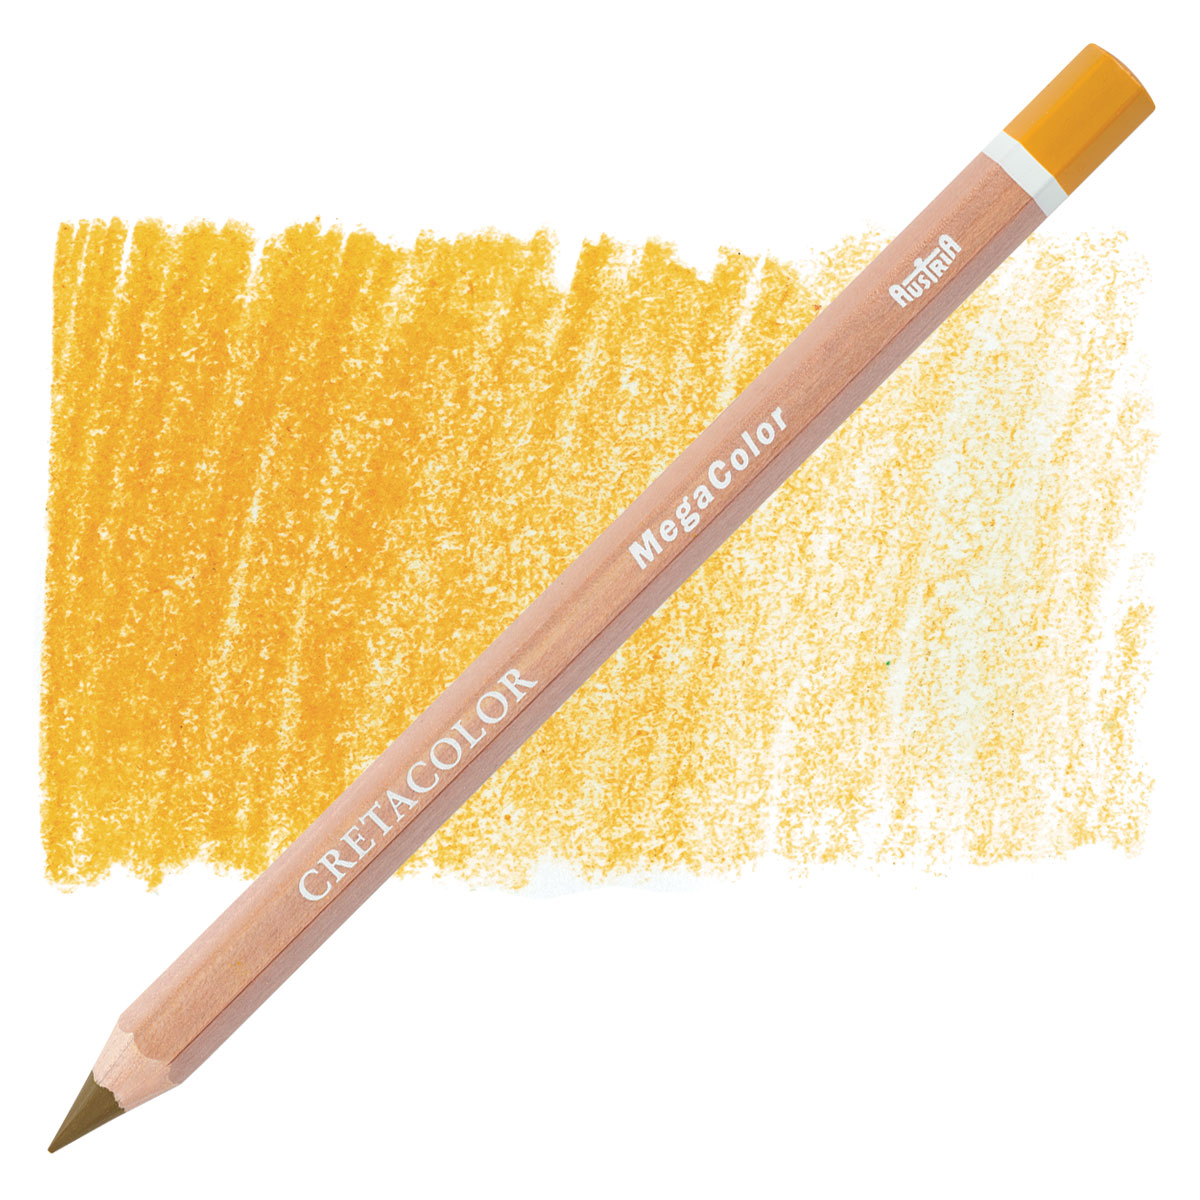 Cretacolor Pastel Pencils Review - A closer look at some fun